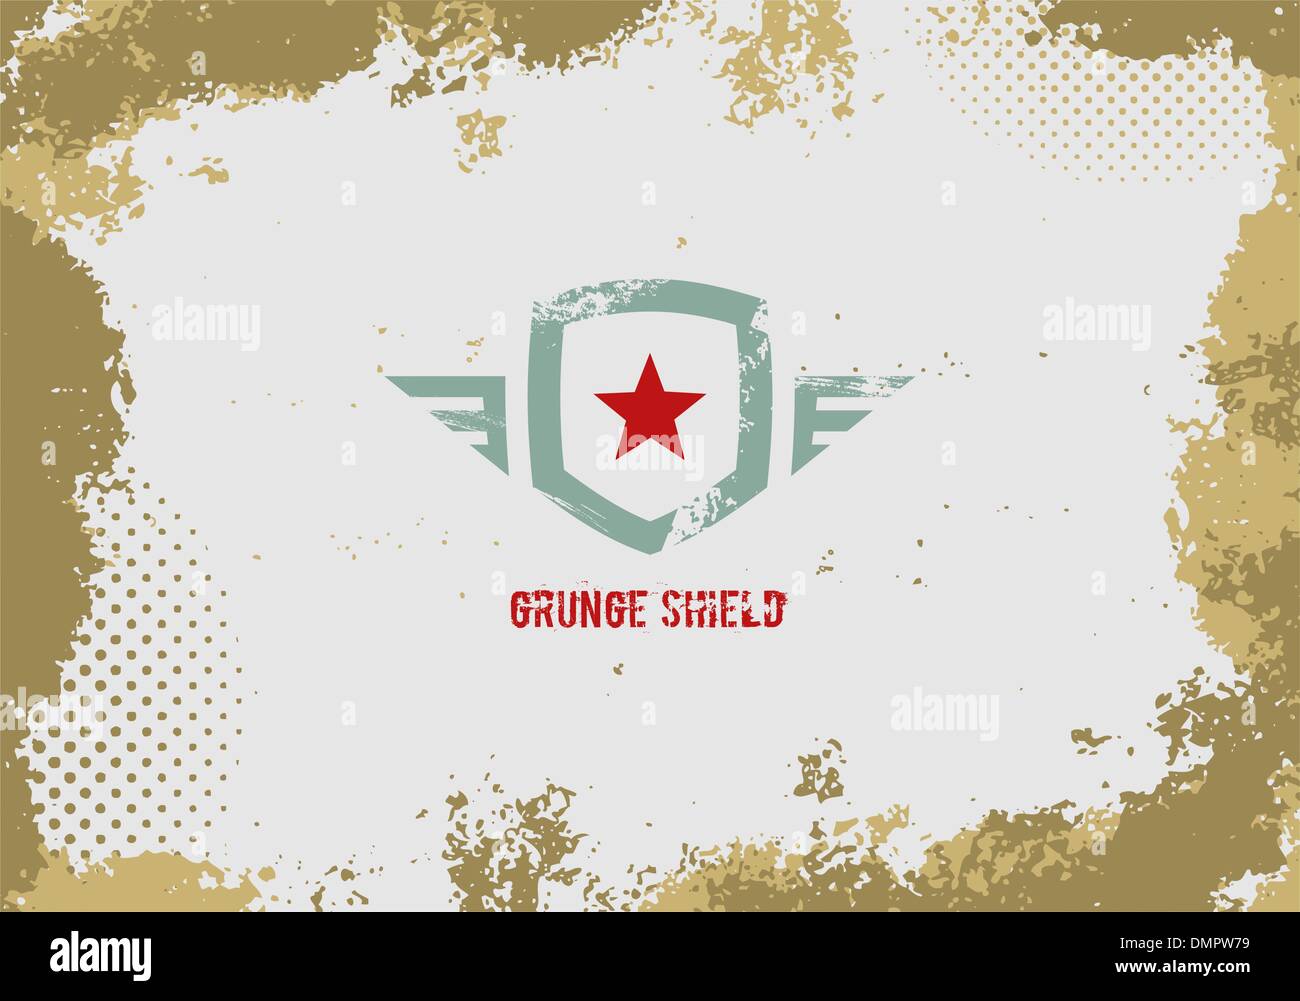 Grunge shield design element on grunge background Stock Vector